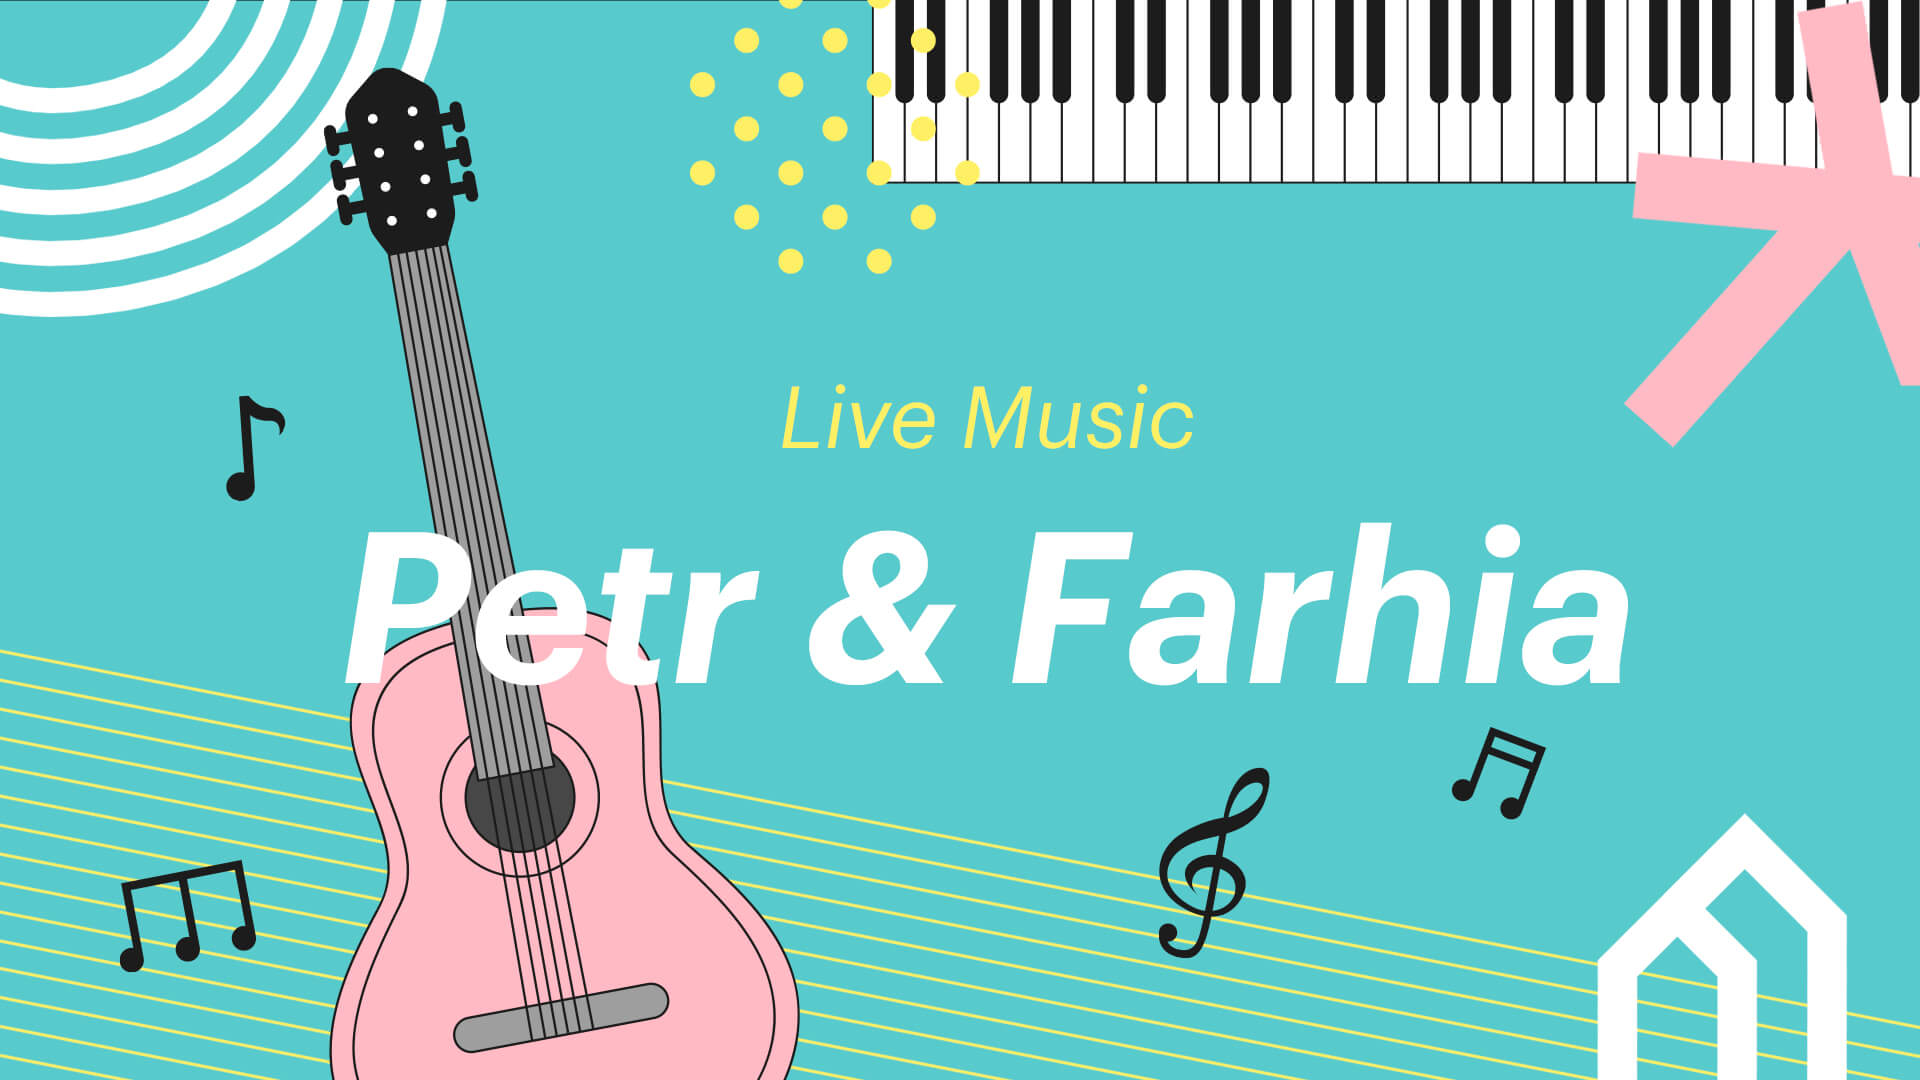 Live music by Petr & Fahria, 26/02